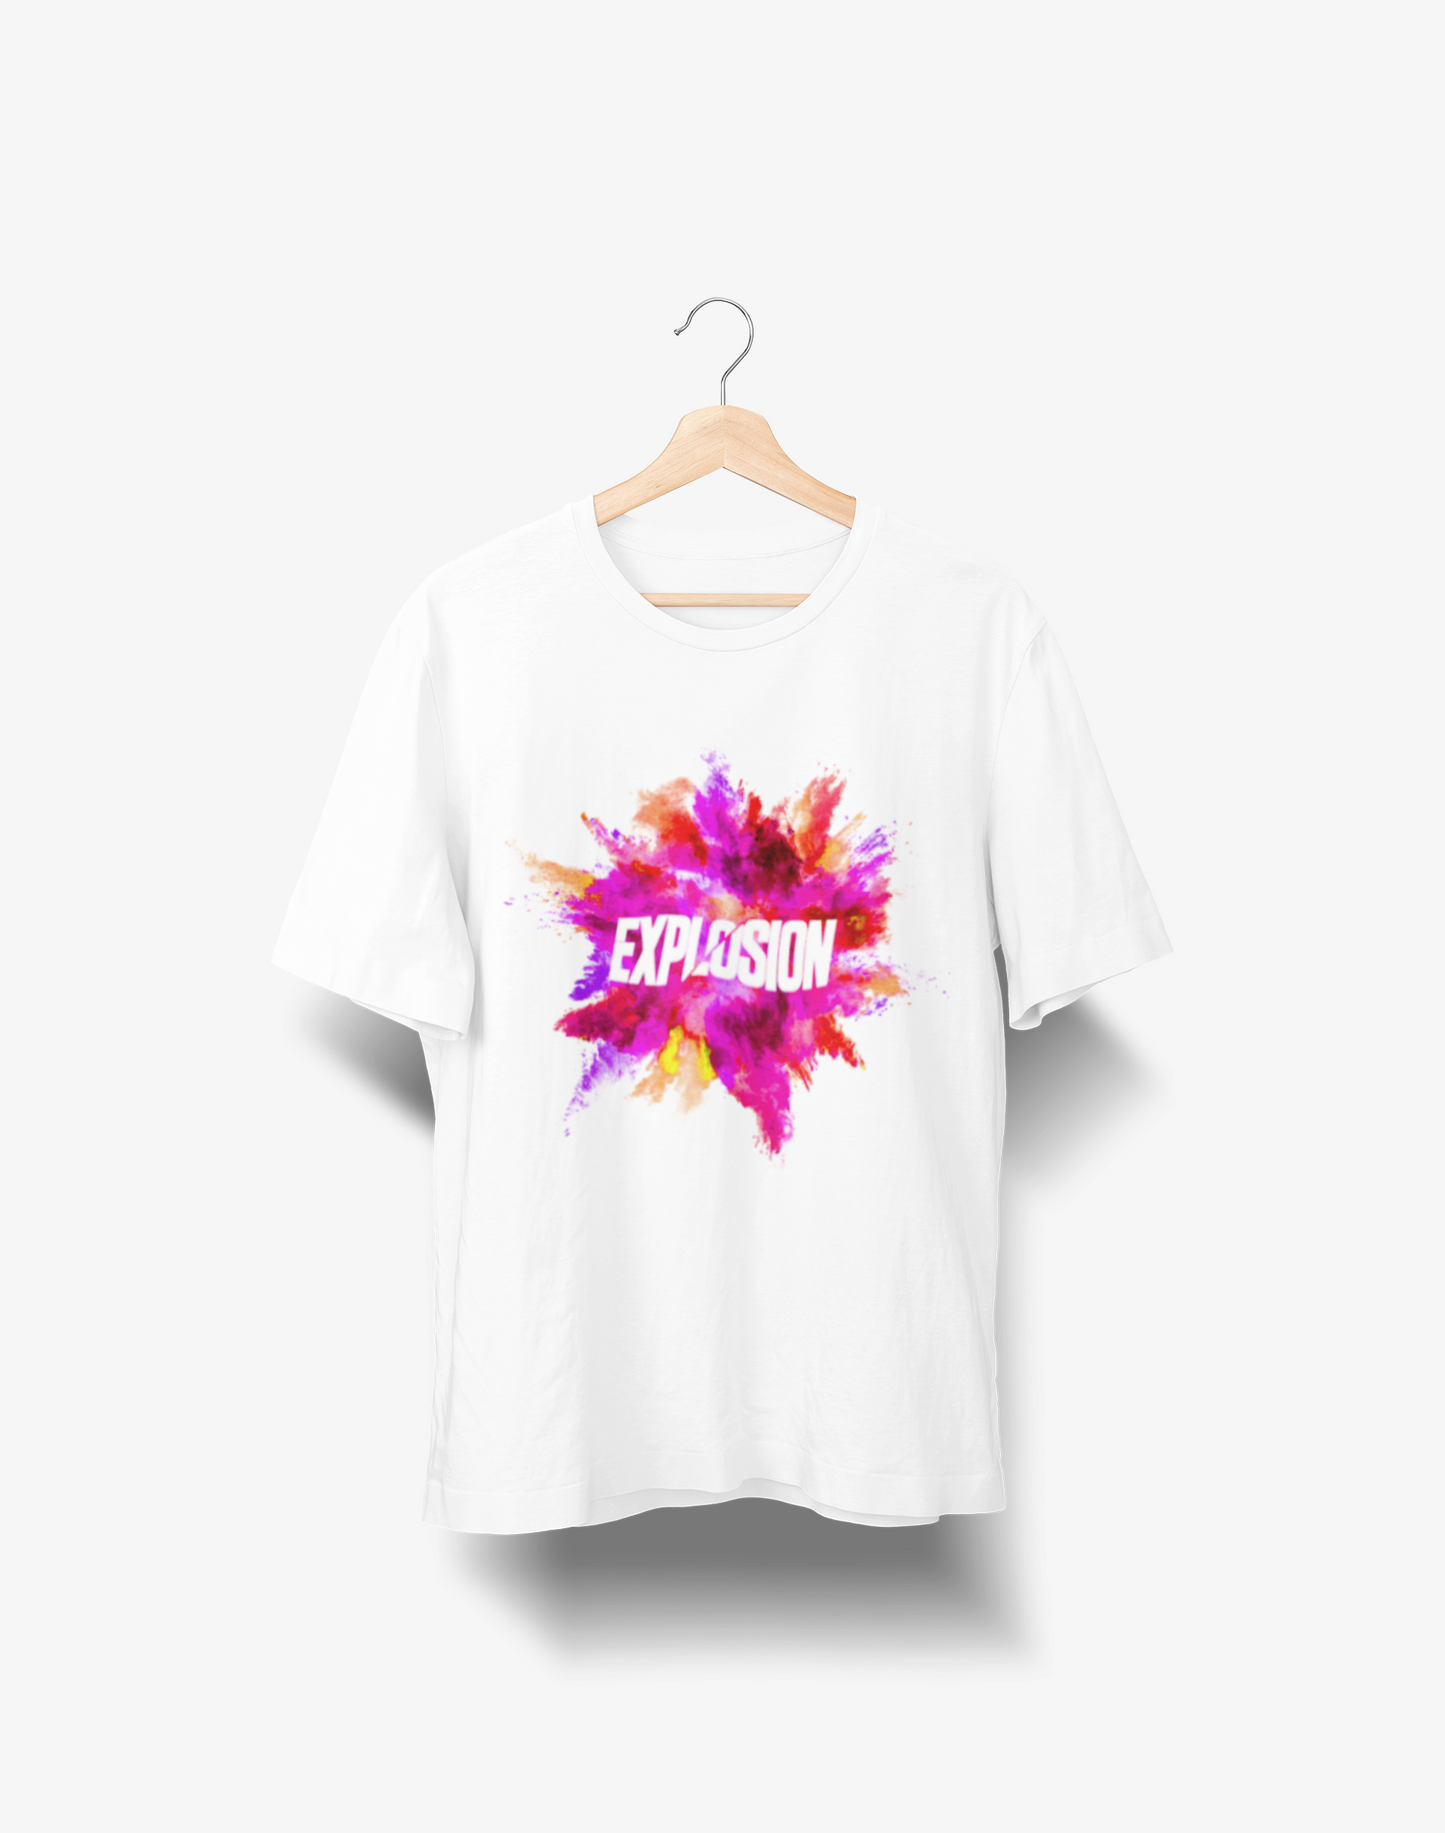 Explosion - T-Shirt